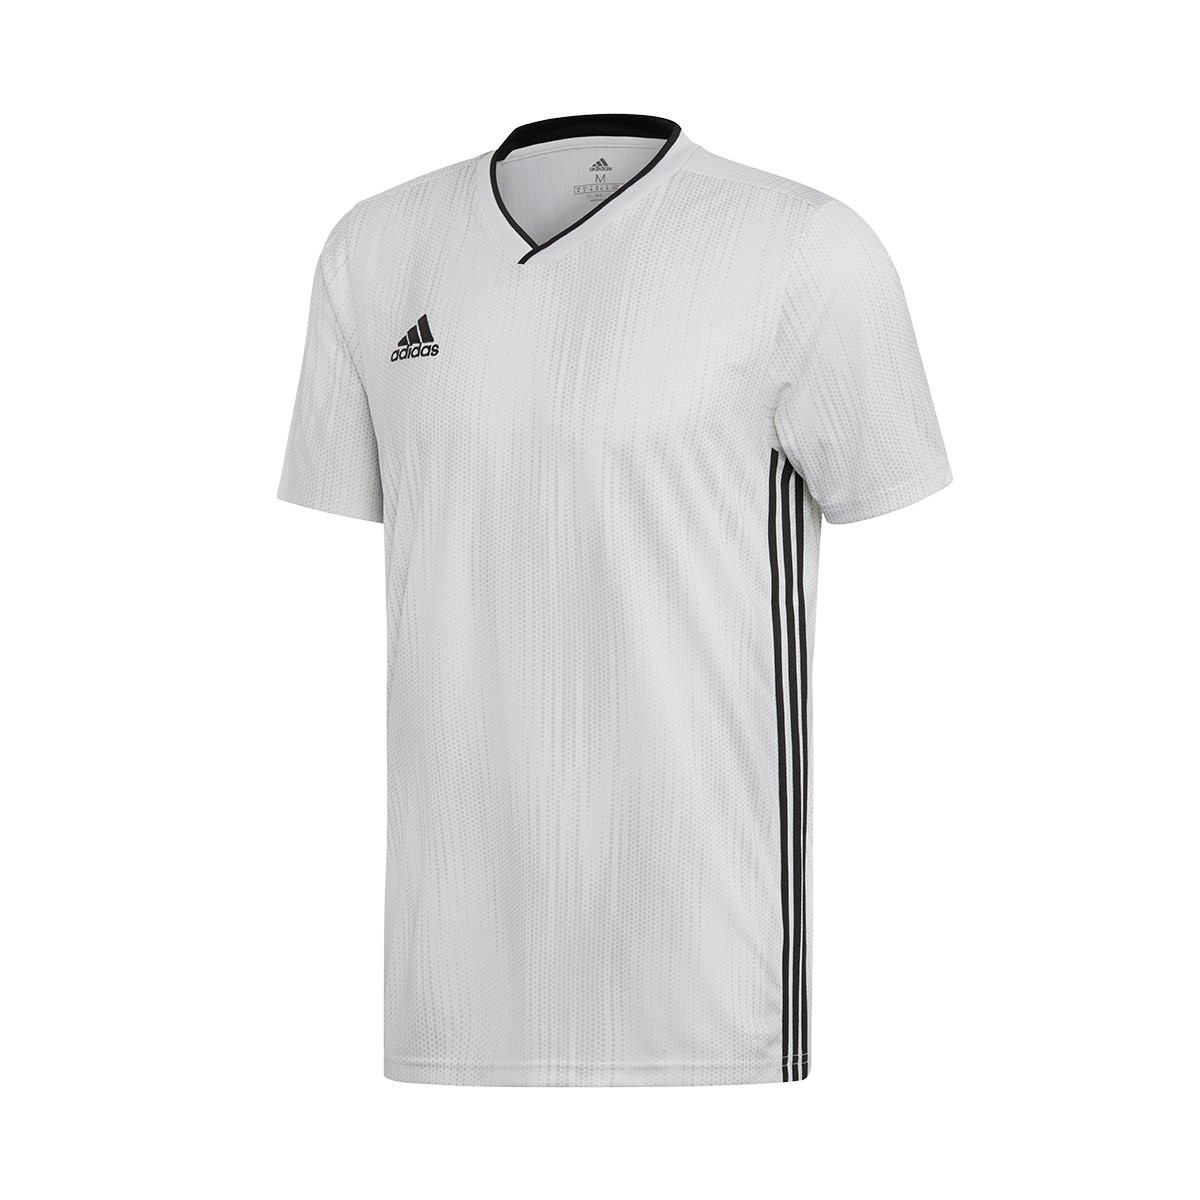 Jersey adidas m/c White-Black - Fútbol Emotion